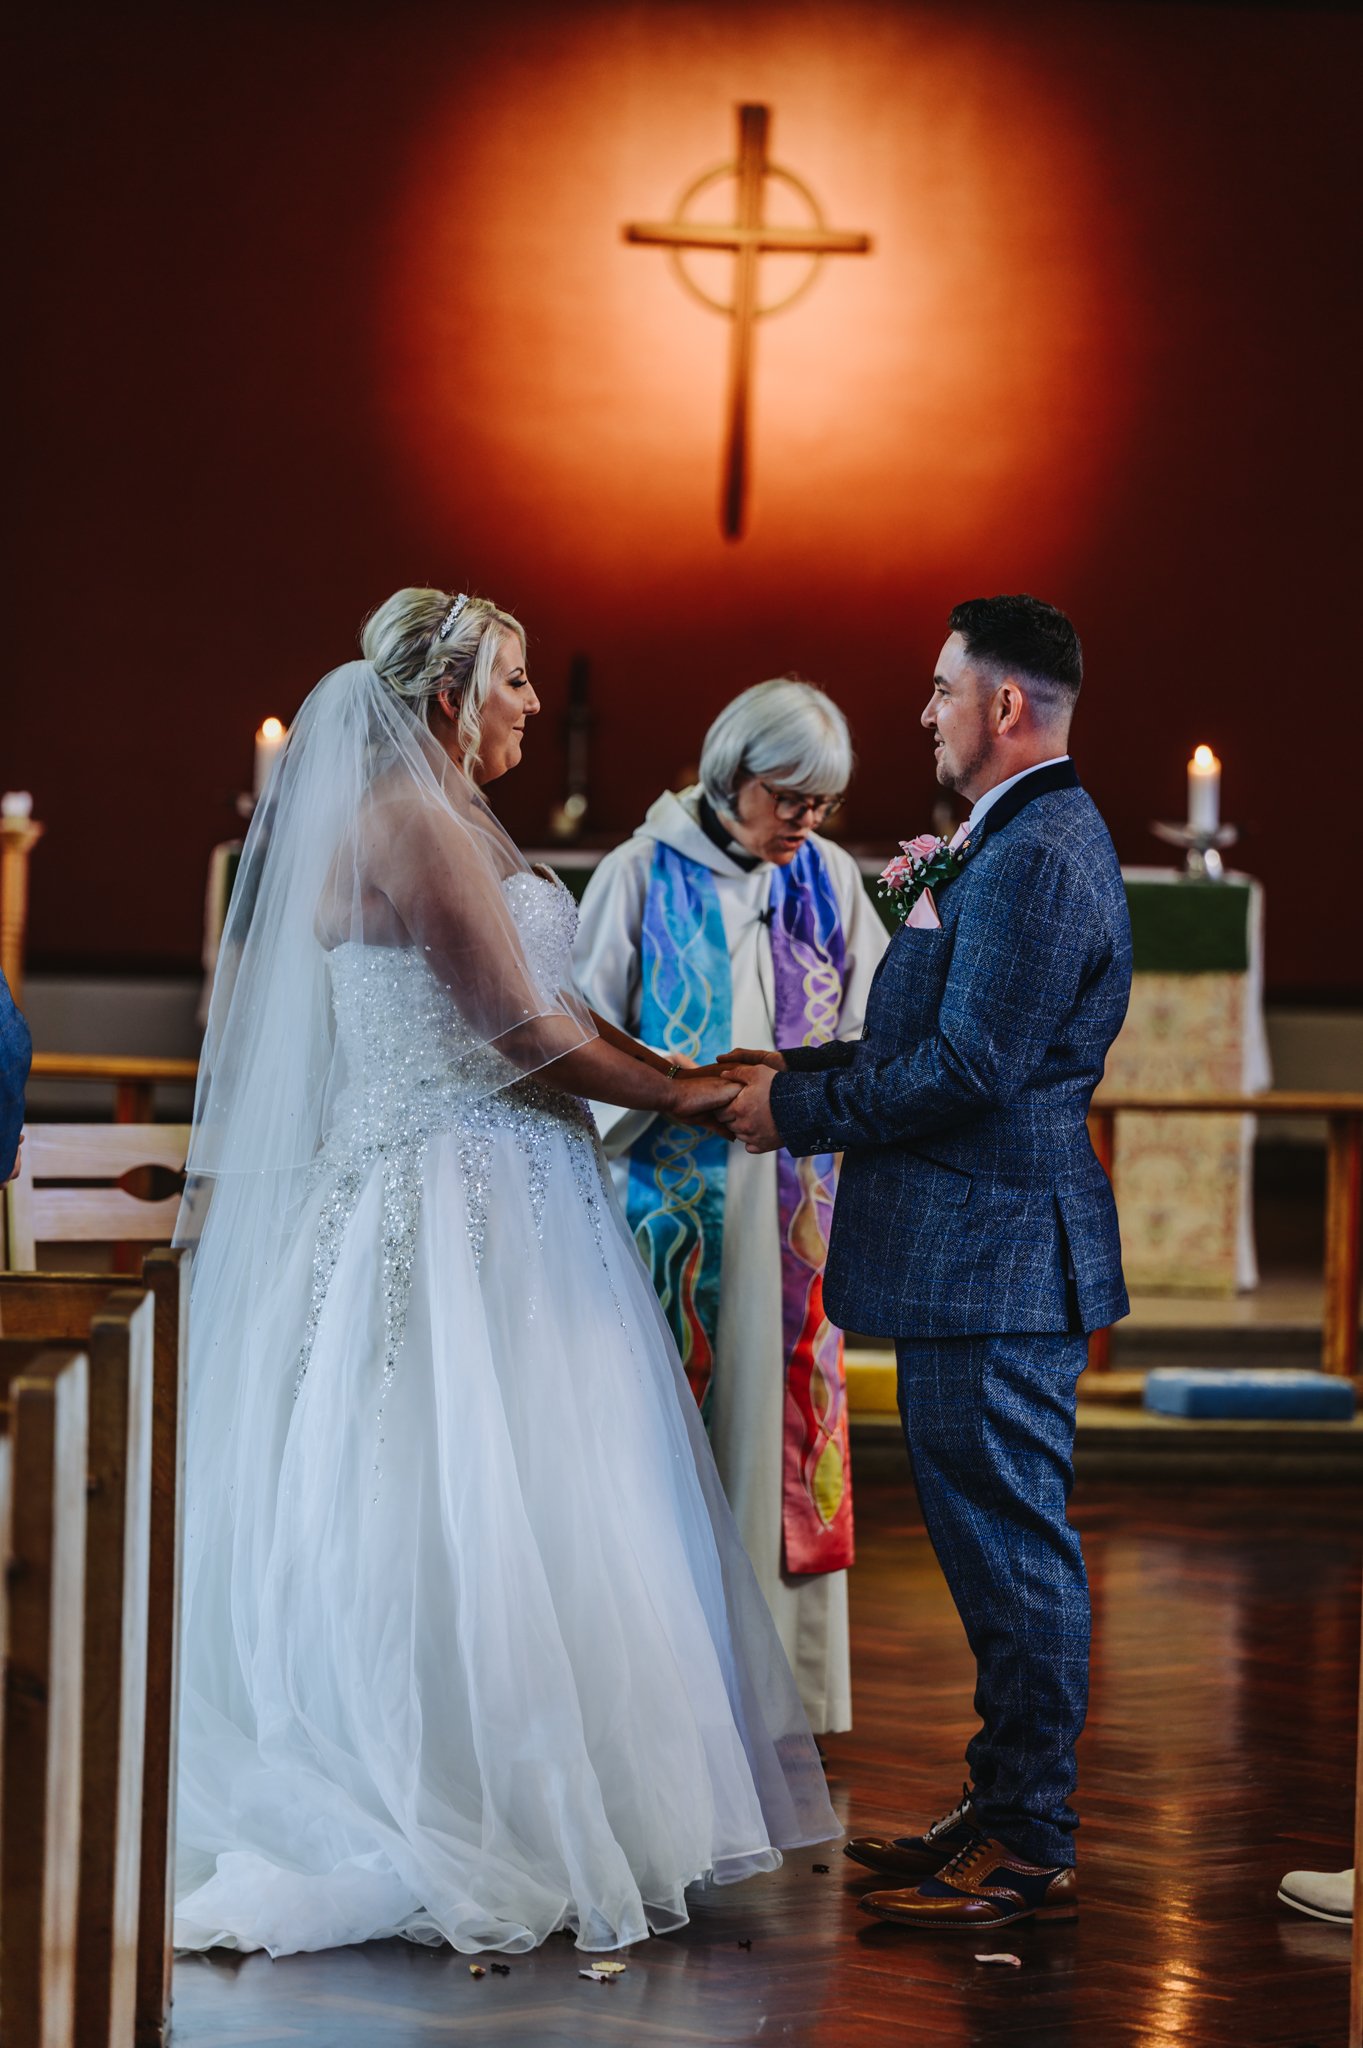 Saint-Clares-Church-Newton-Aycliffe-wedding-photograper (3 of 13).jpg